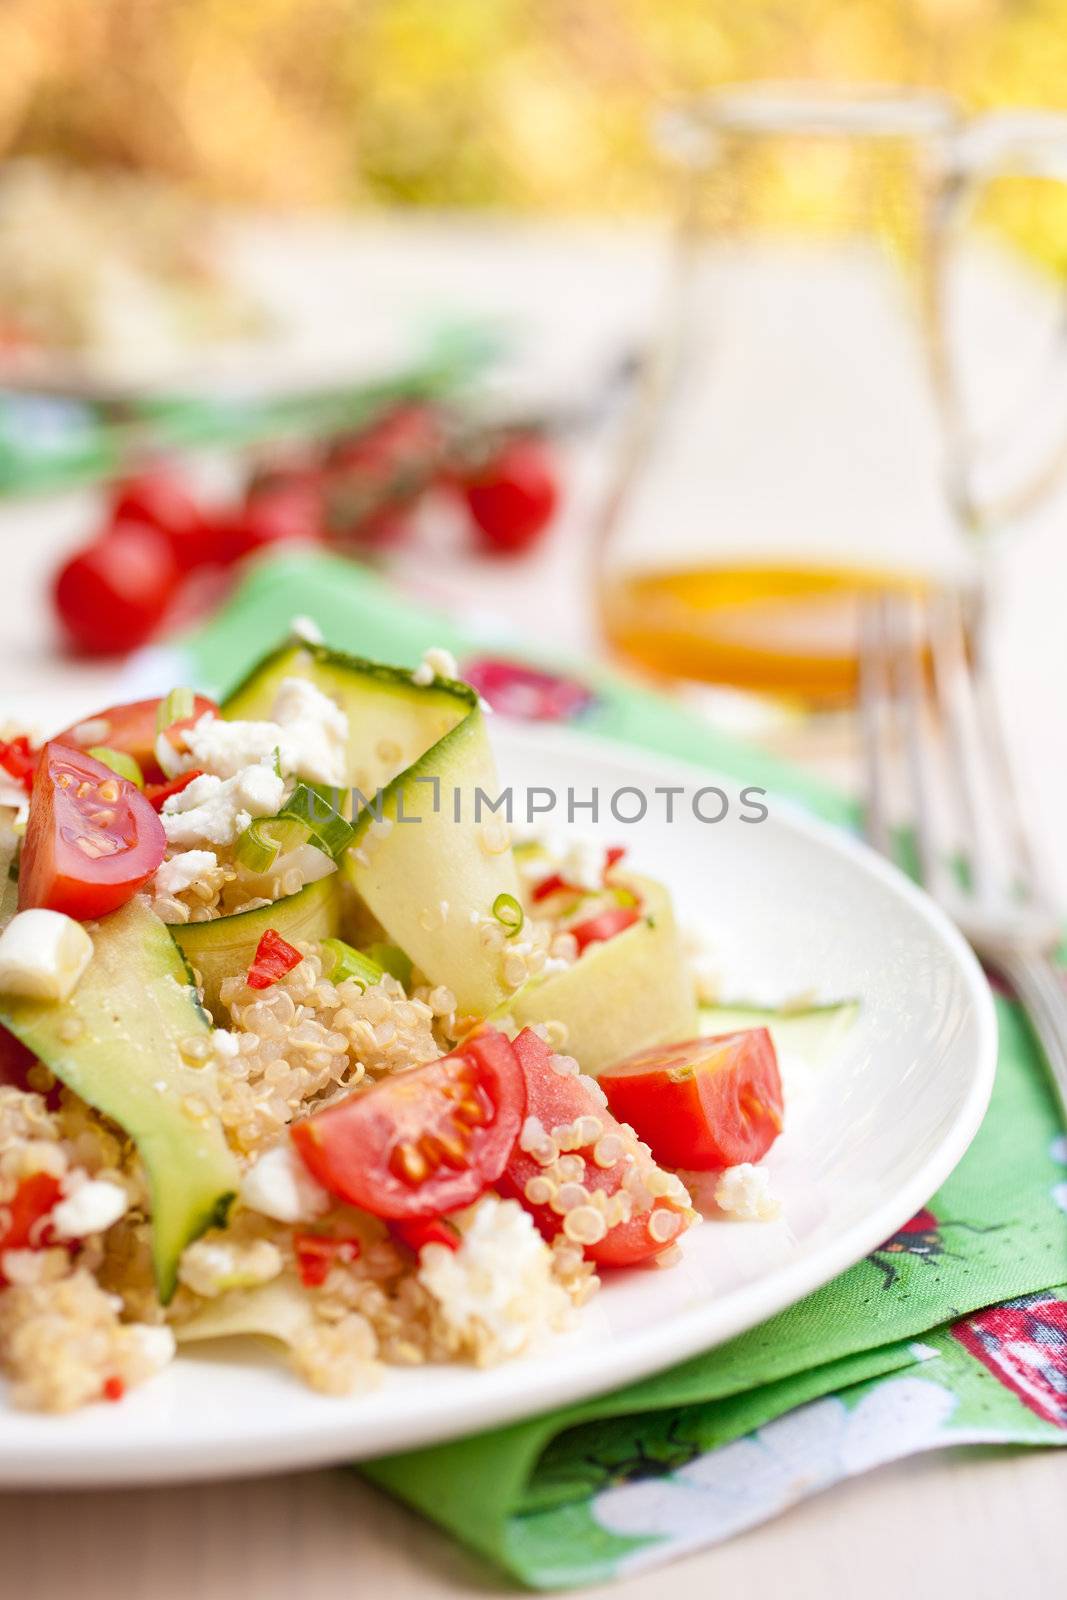 Quinoa salad by Fotosmurf